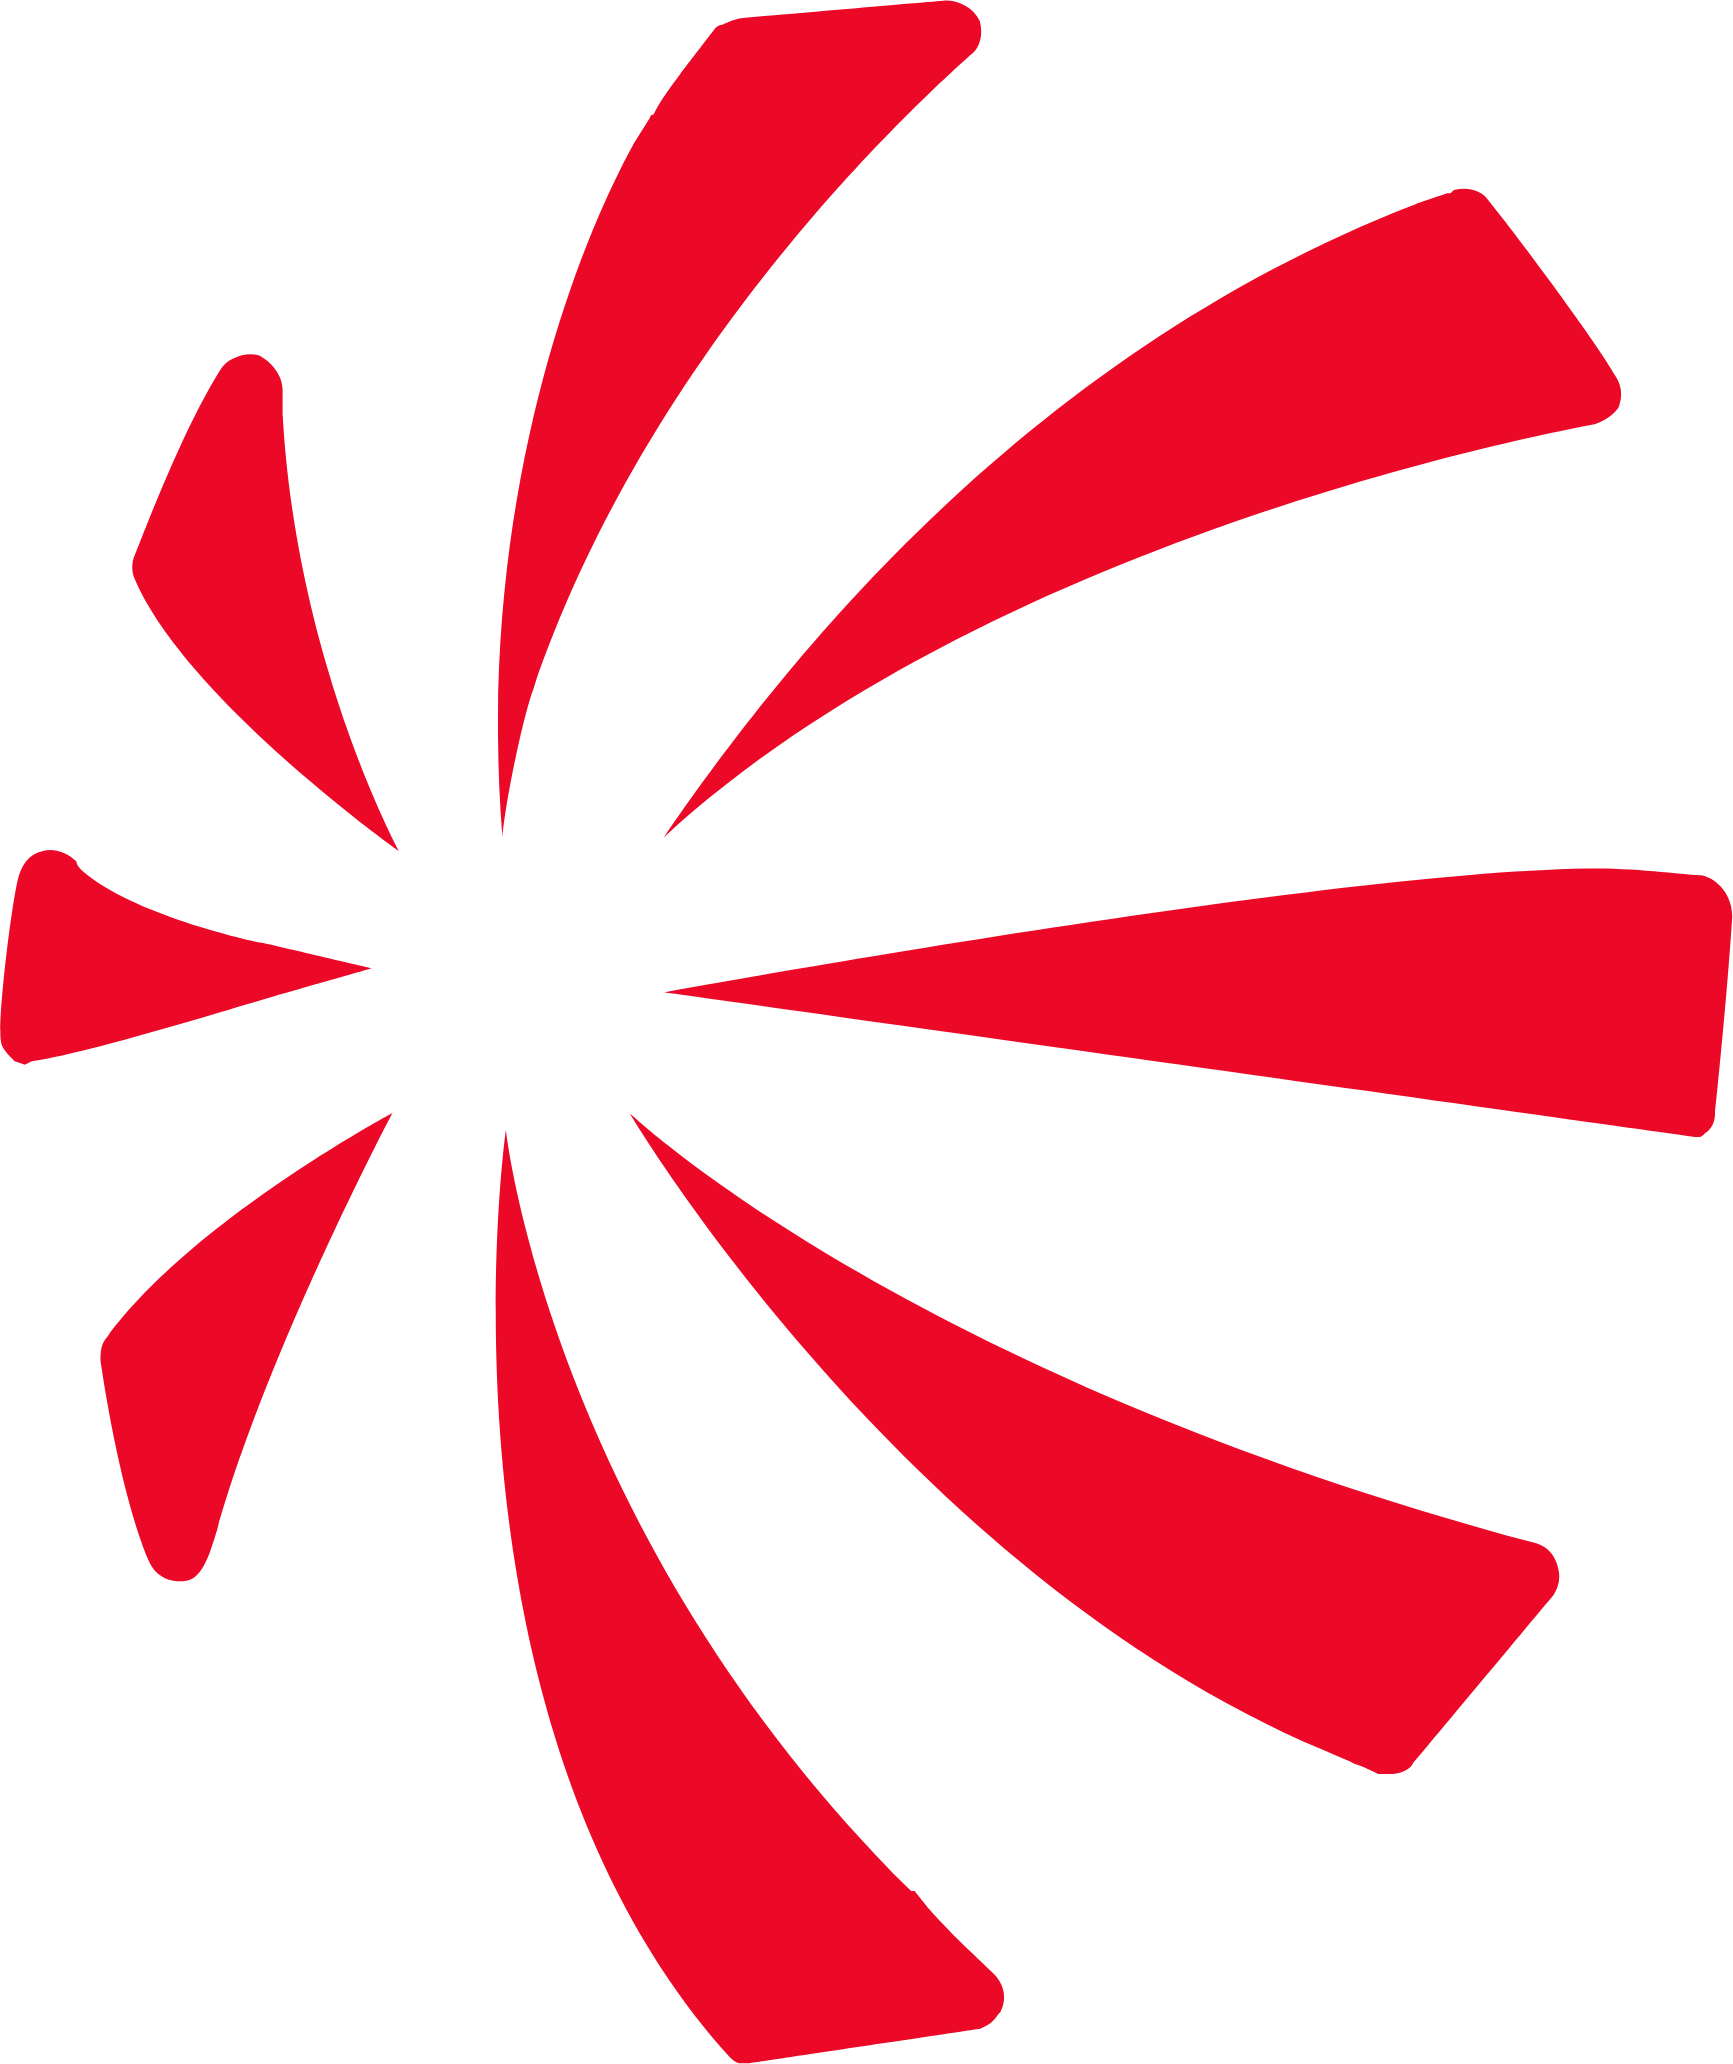 Leonardo logo in transparent PNG format